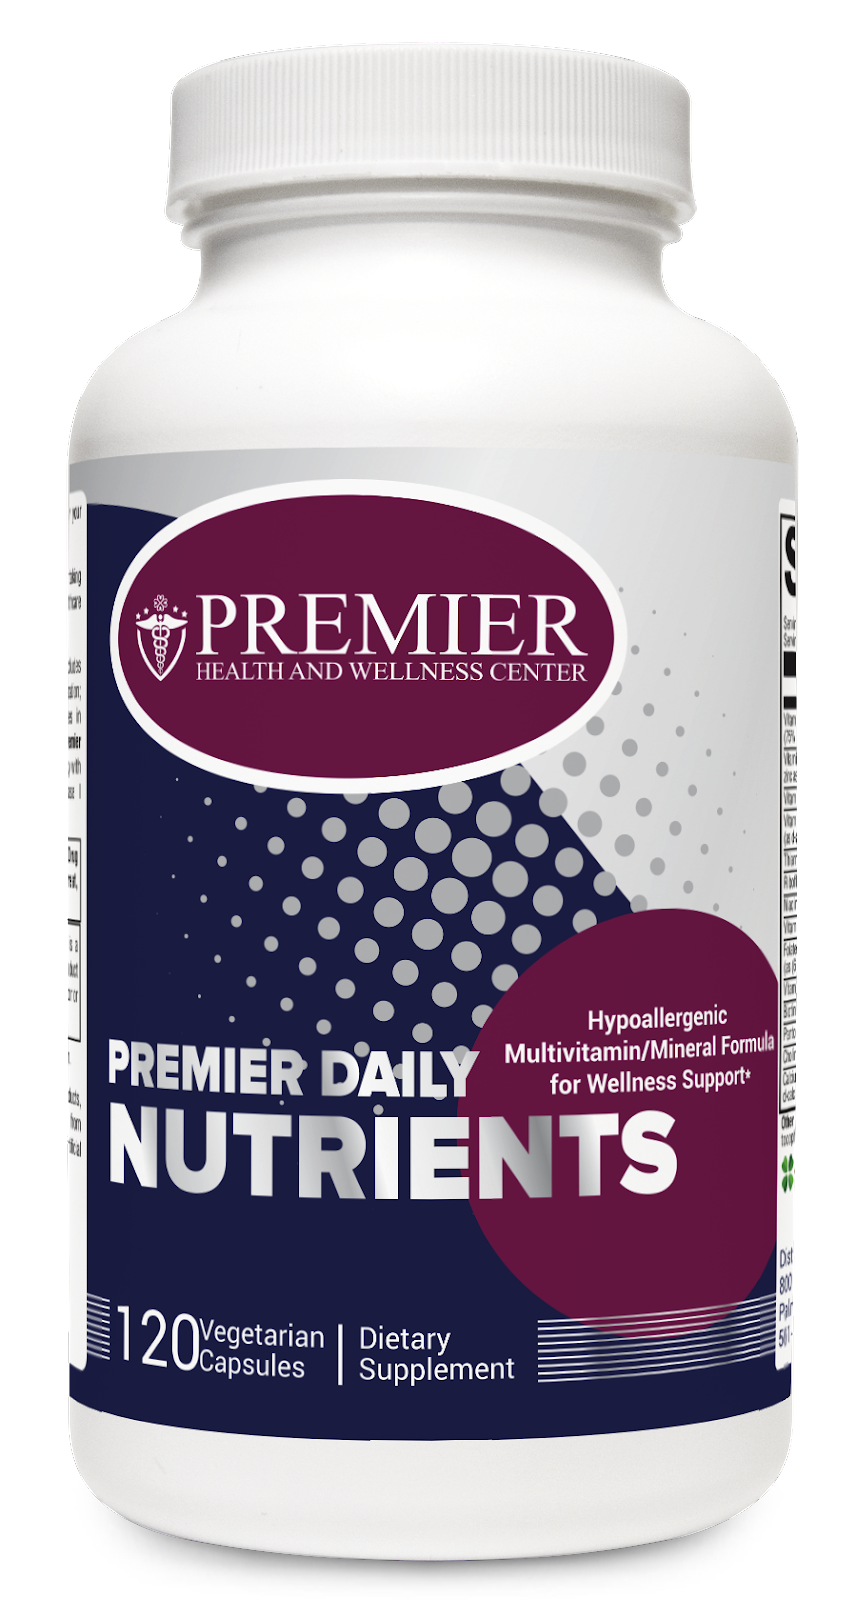 Premier Daily Nutrients